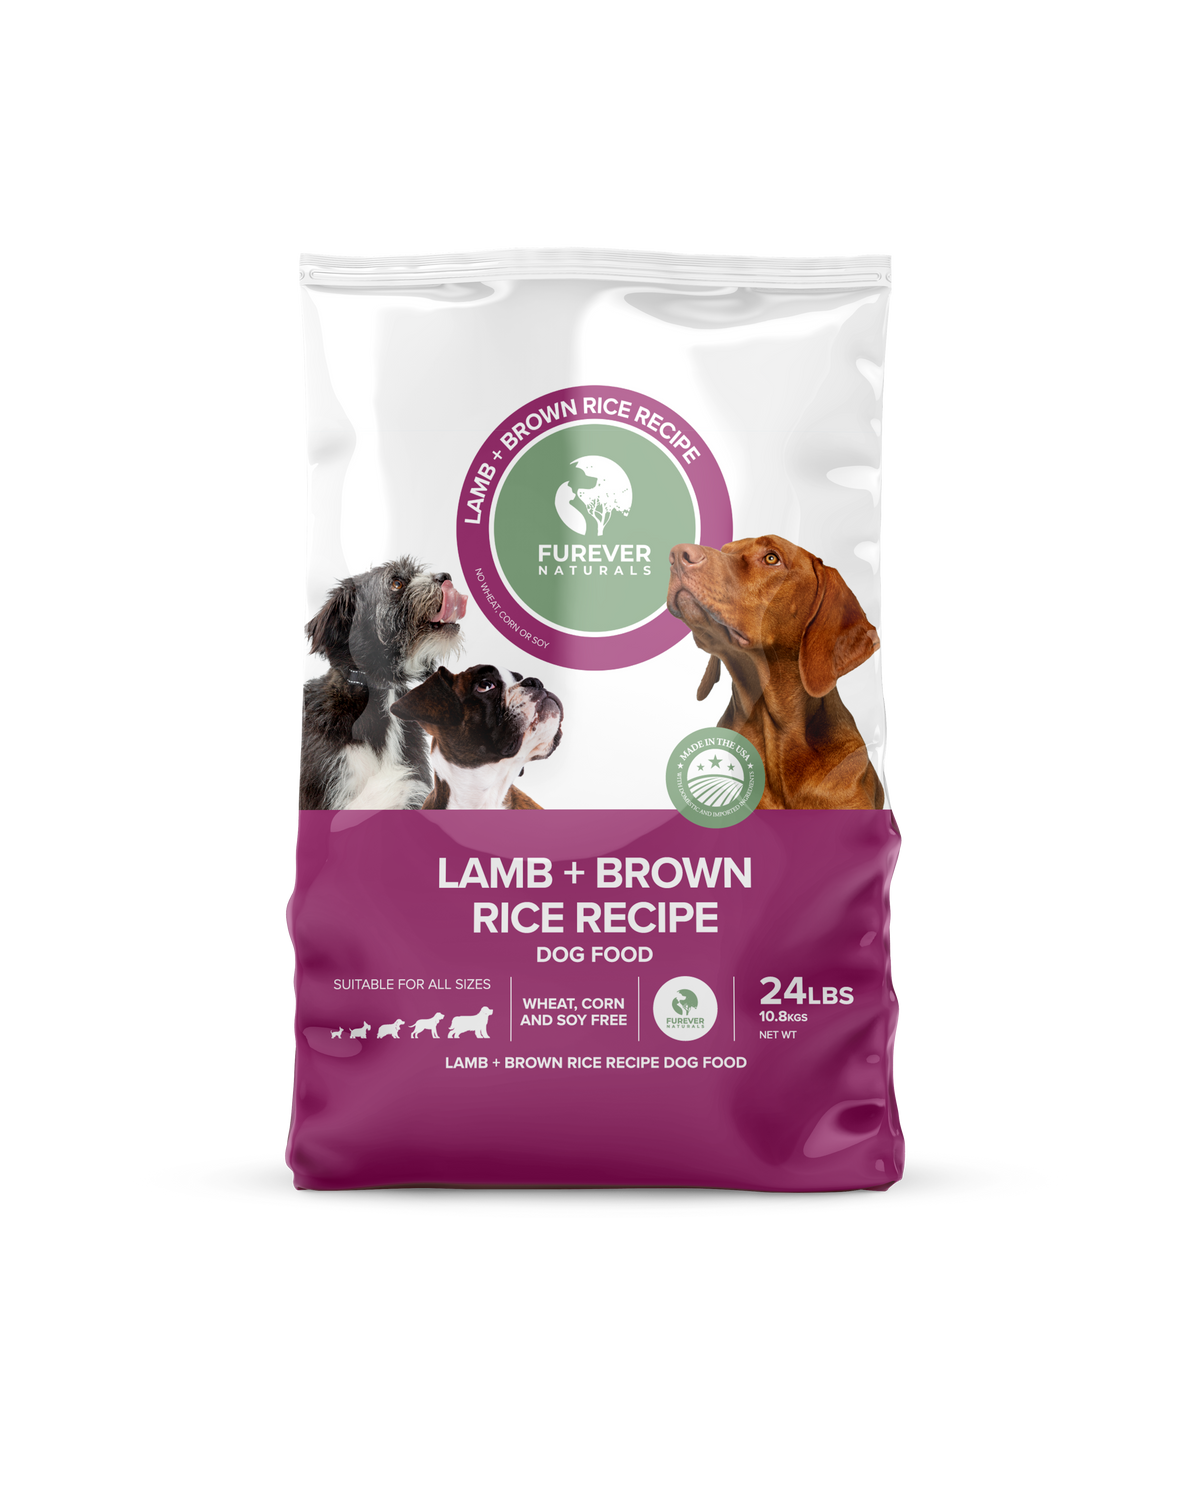 a bag of lamb and brown dog food